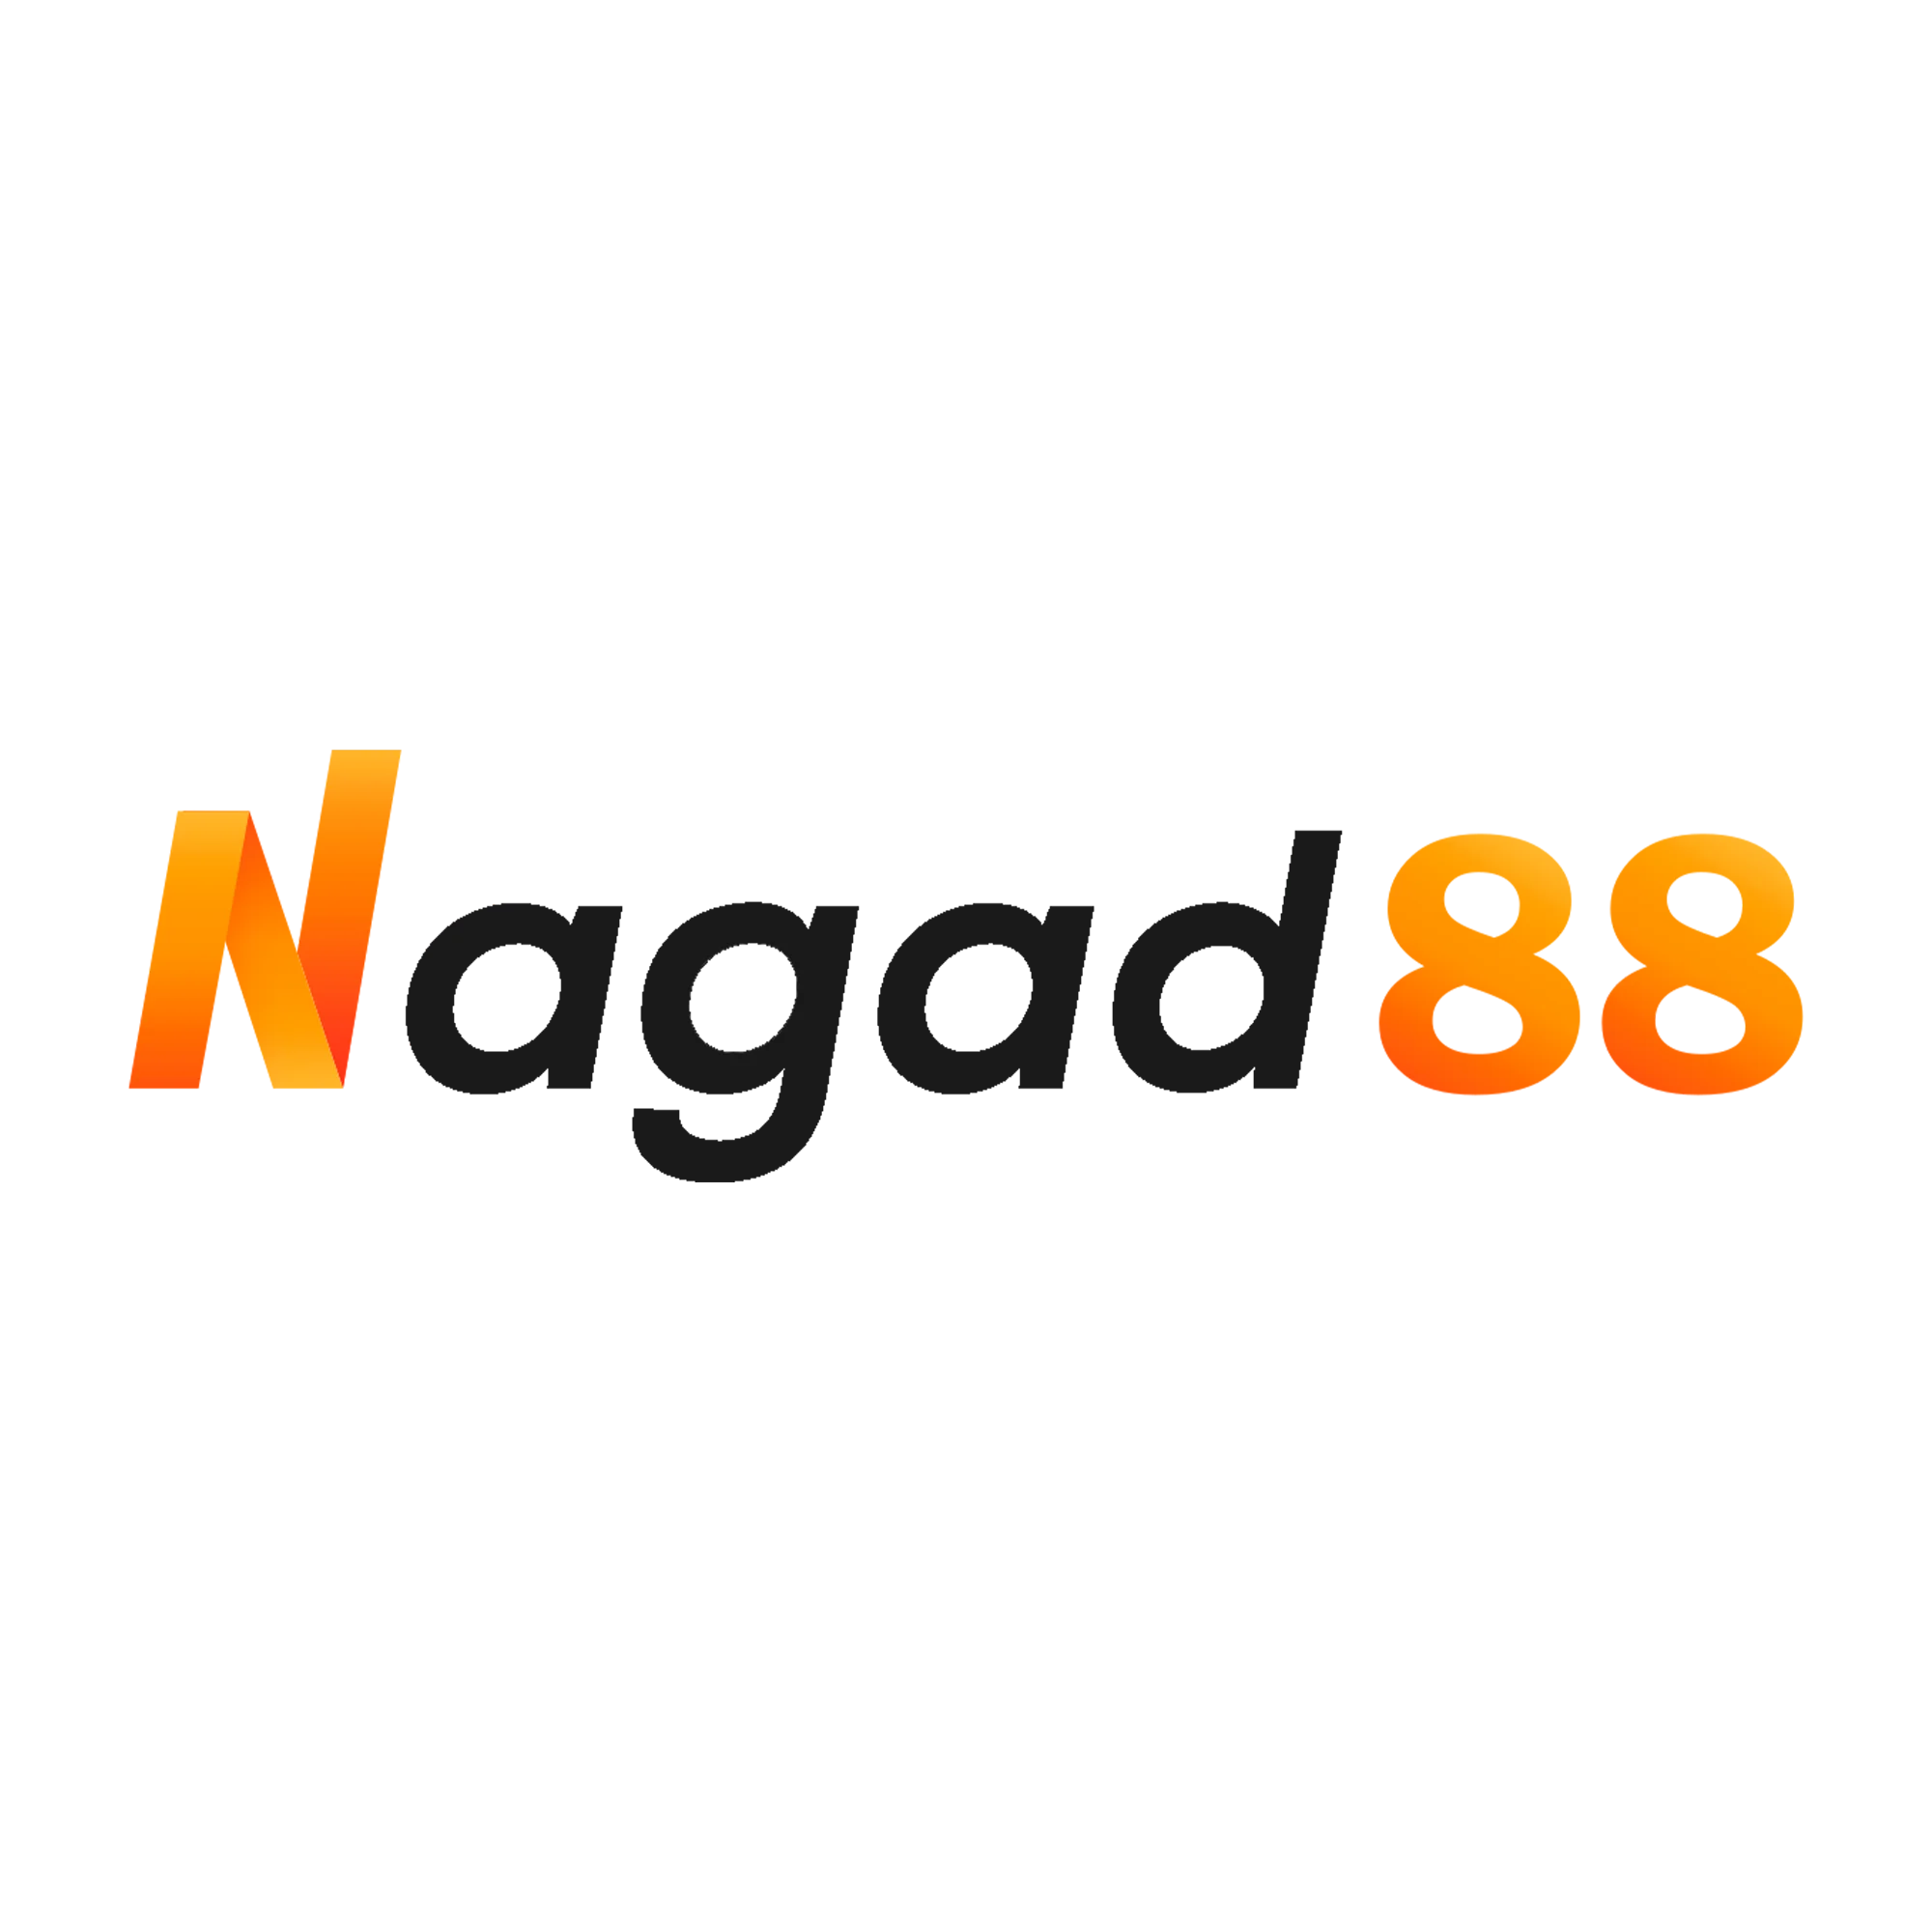 Nagad88